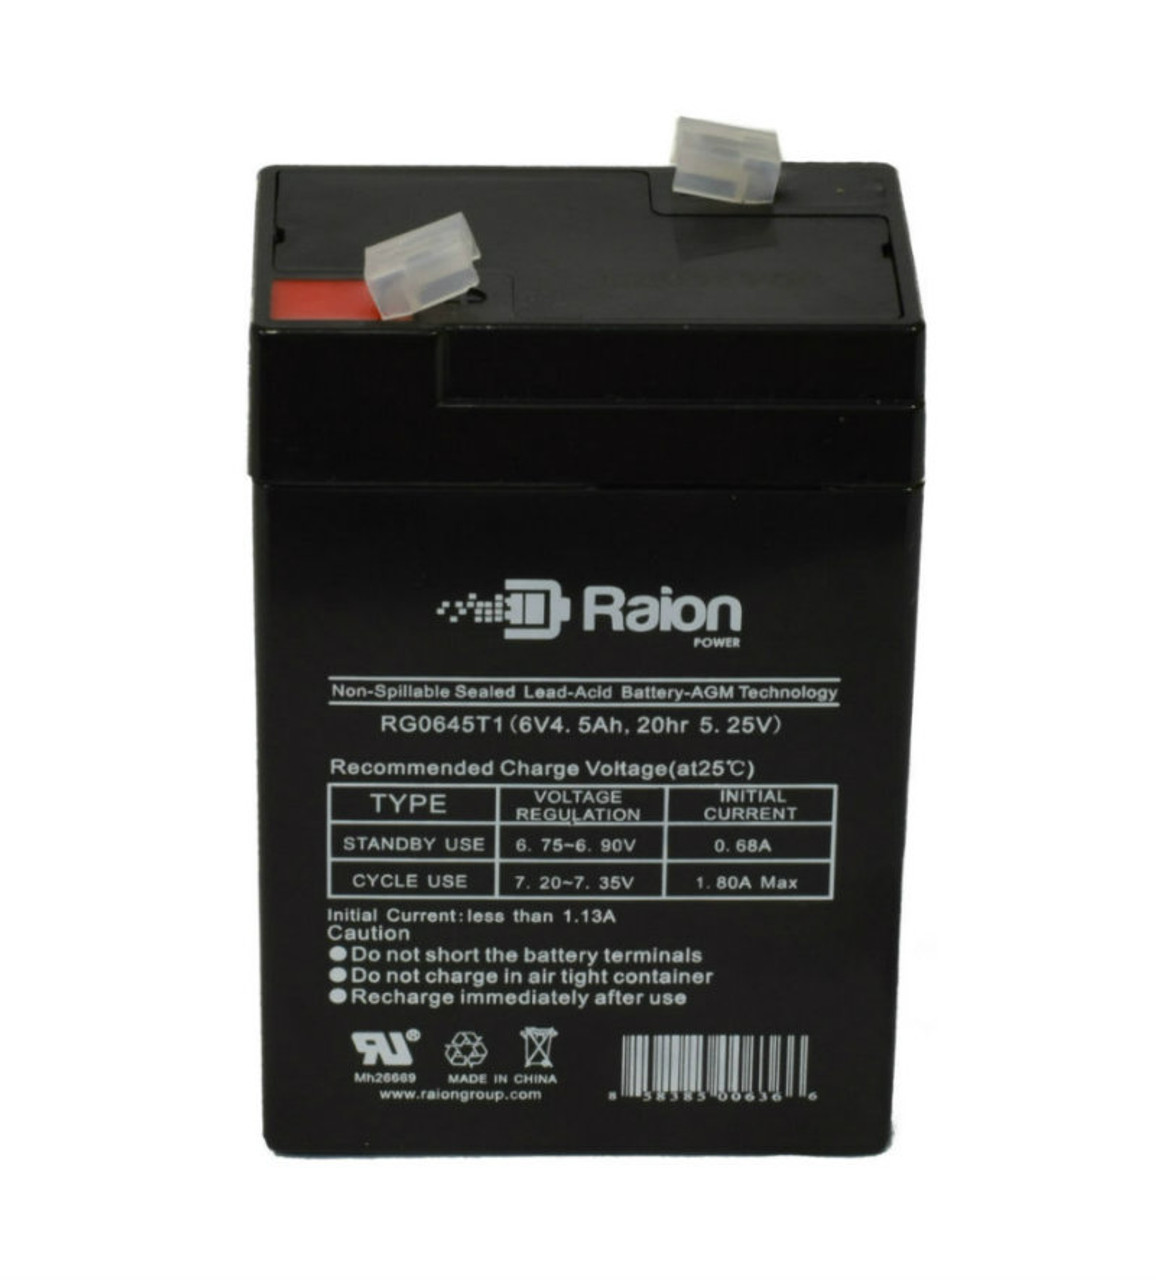 Raion Power RG0645T1 Replacement Battery Cartridge for Ya Heng 3FM5